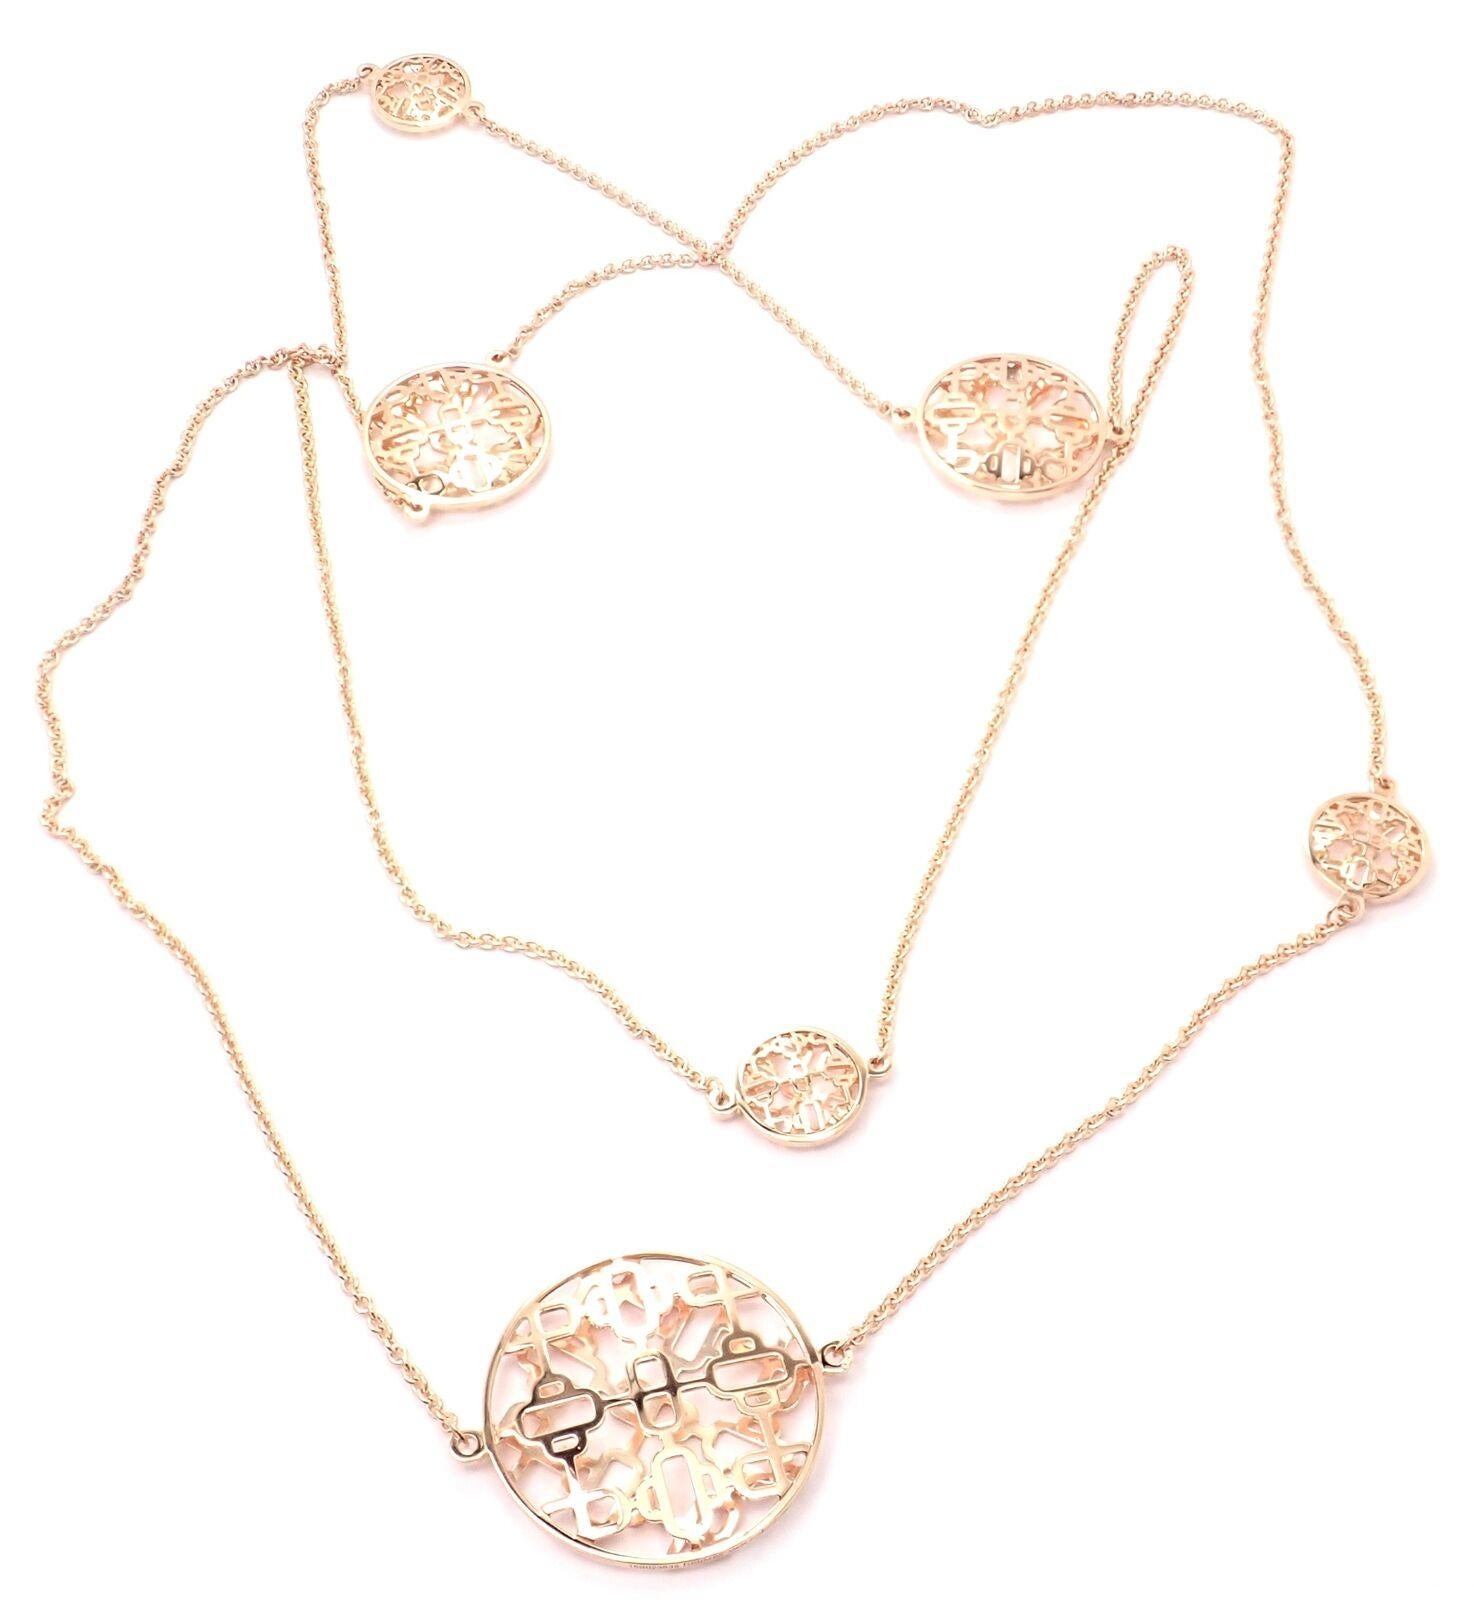 18k Rose Gold d'Ancre Passerelle Long Necklace by Hermes. 
Details: 
Length: 47